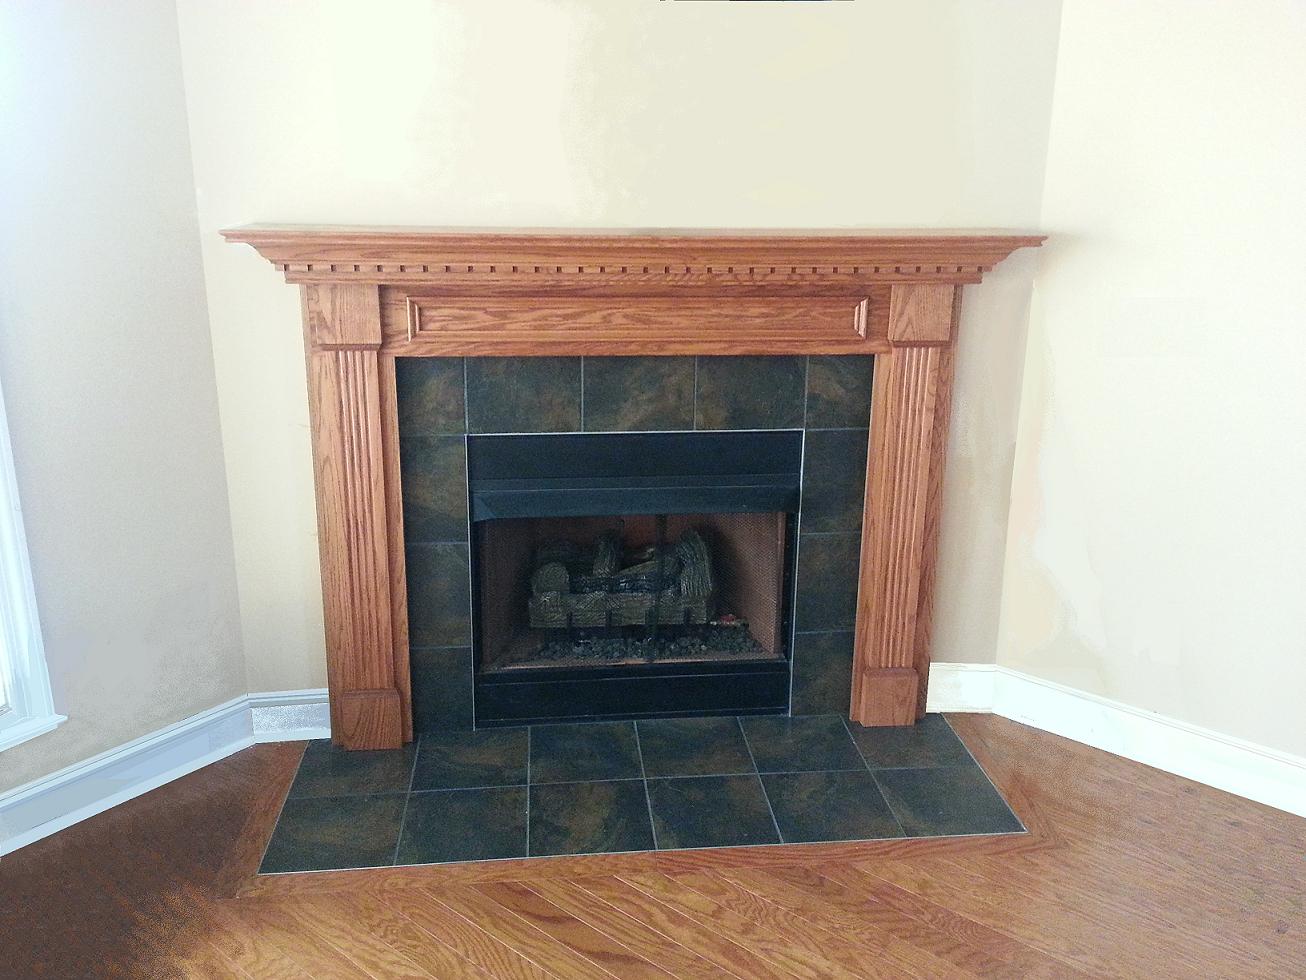 Fireplace Mantel installed by customer | Testimonial